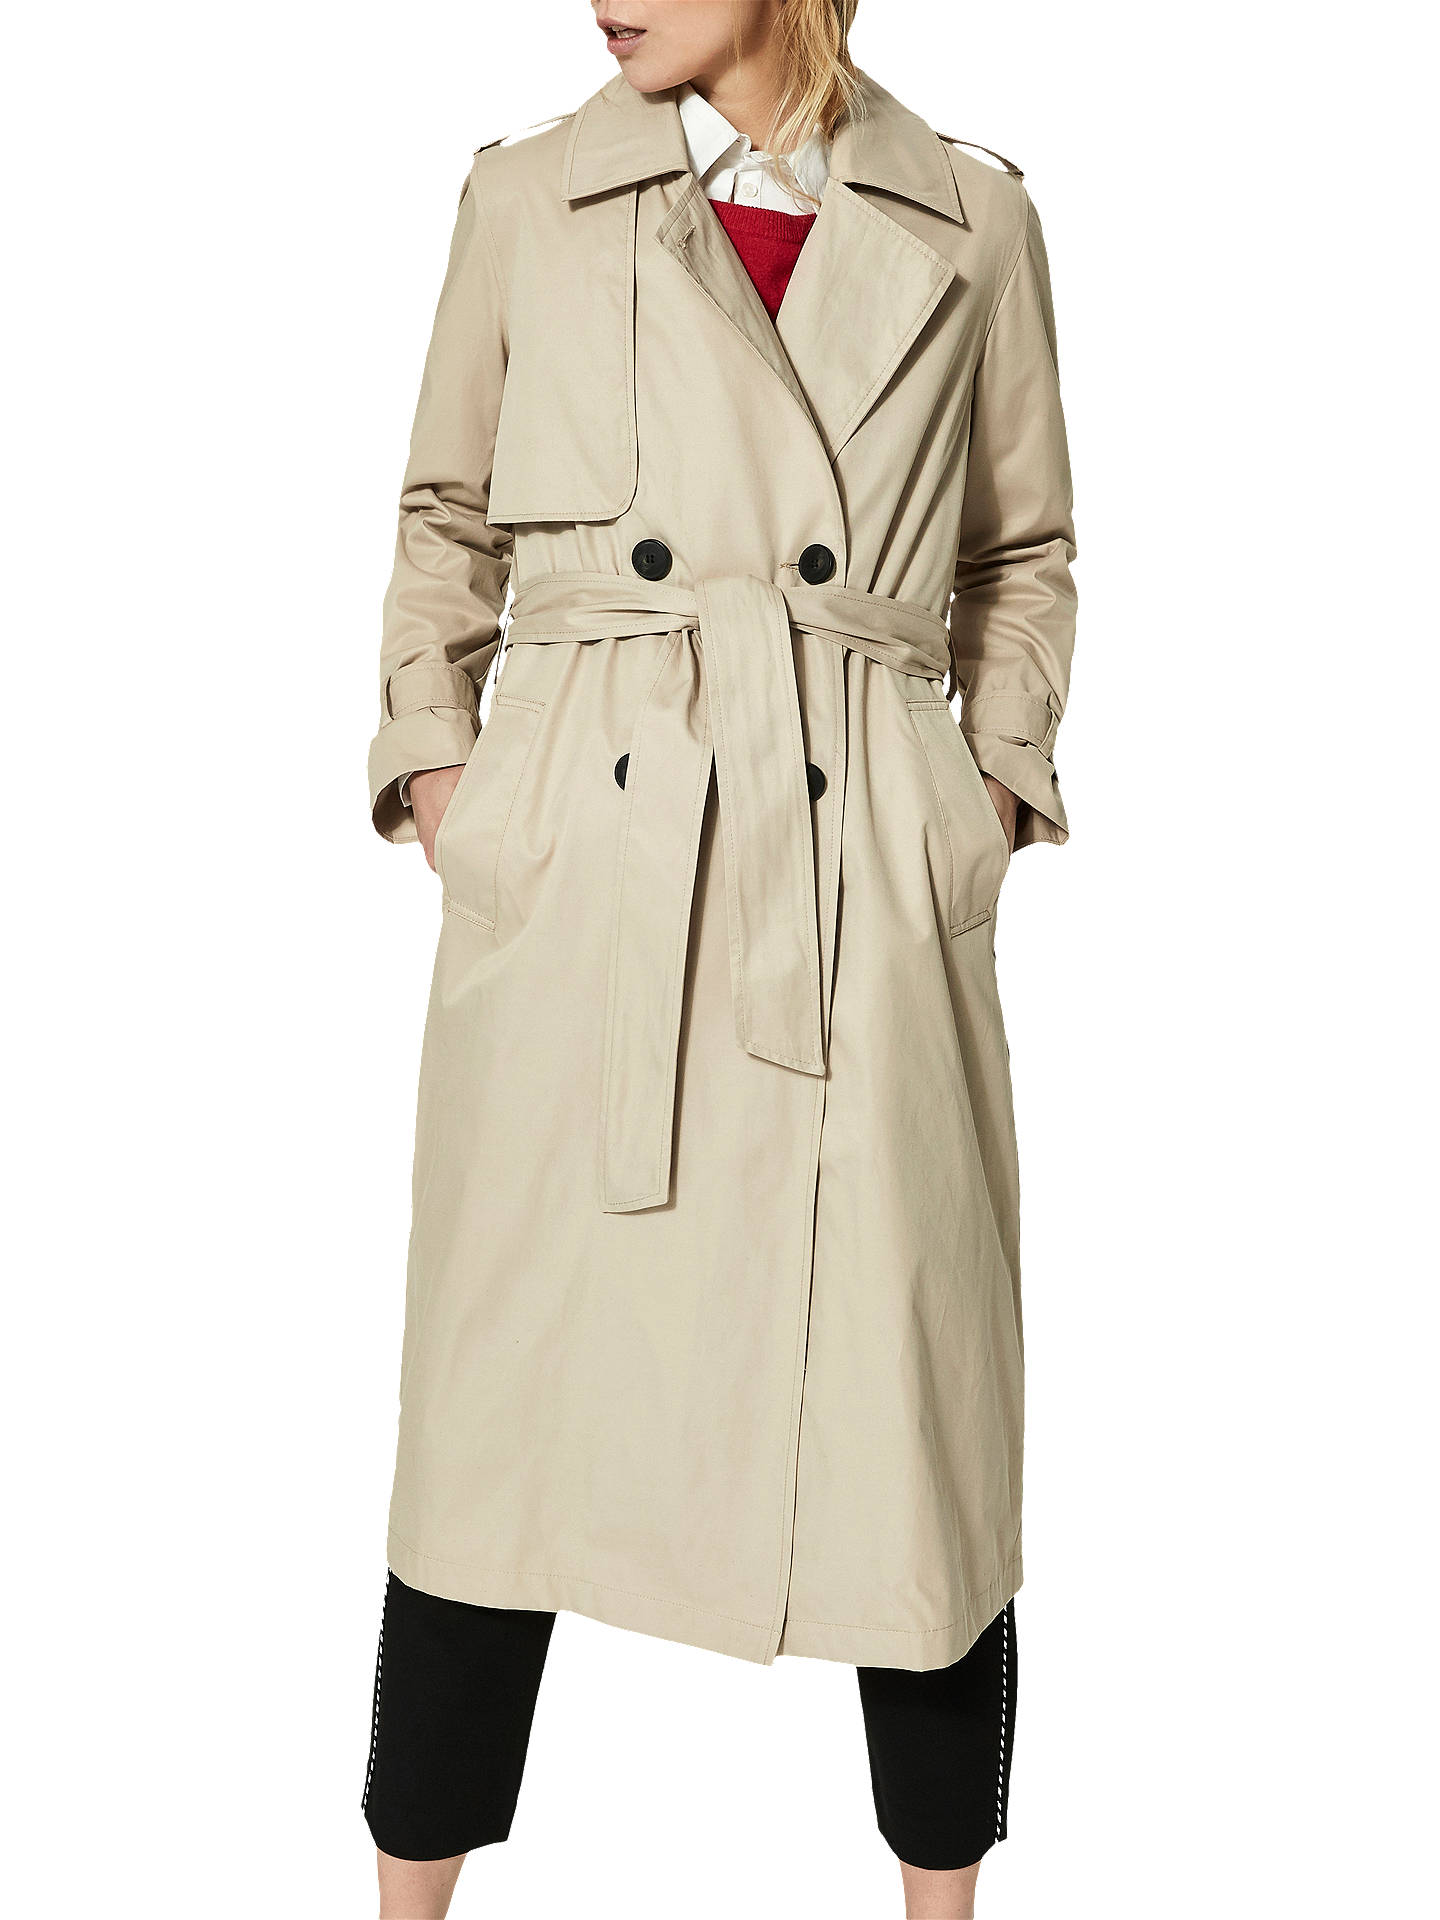 Selected Femme Week Trench Coat, Crockery at John Lewis & Partners